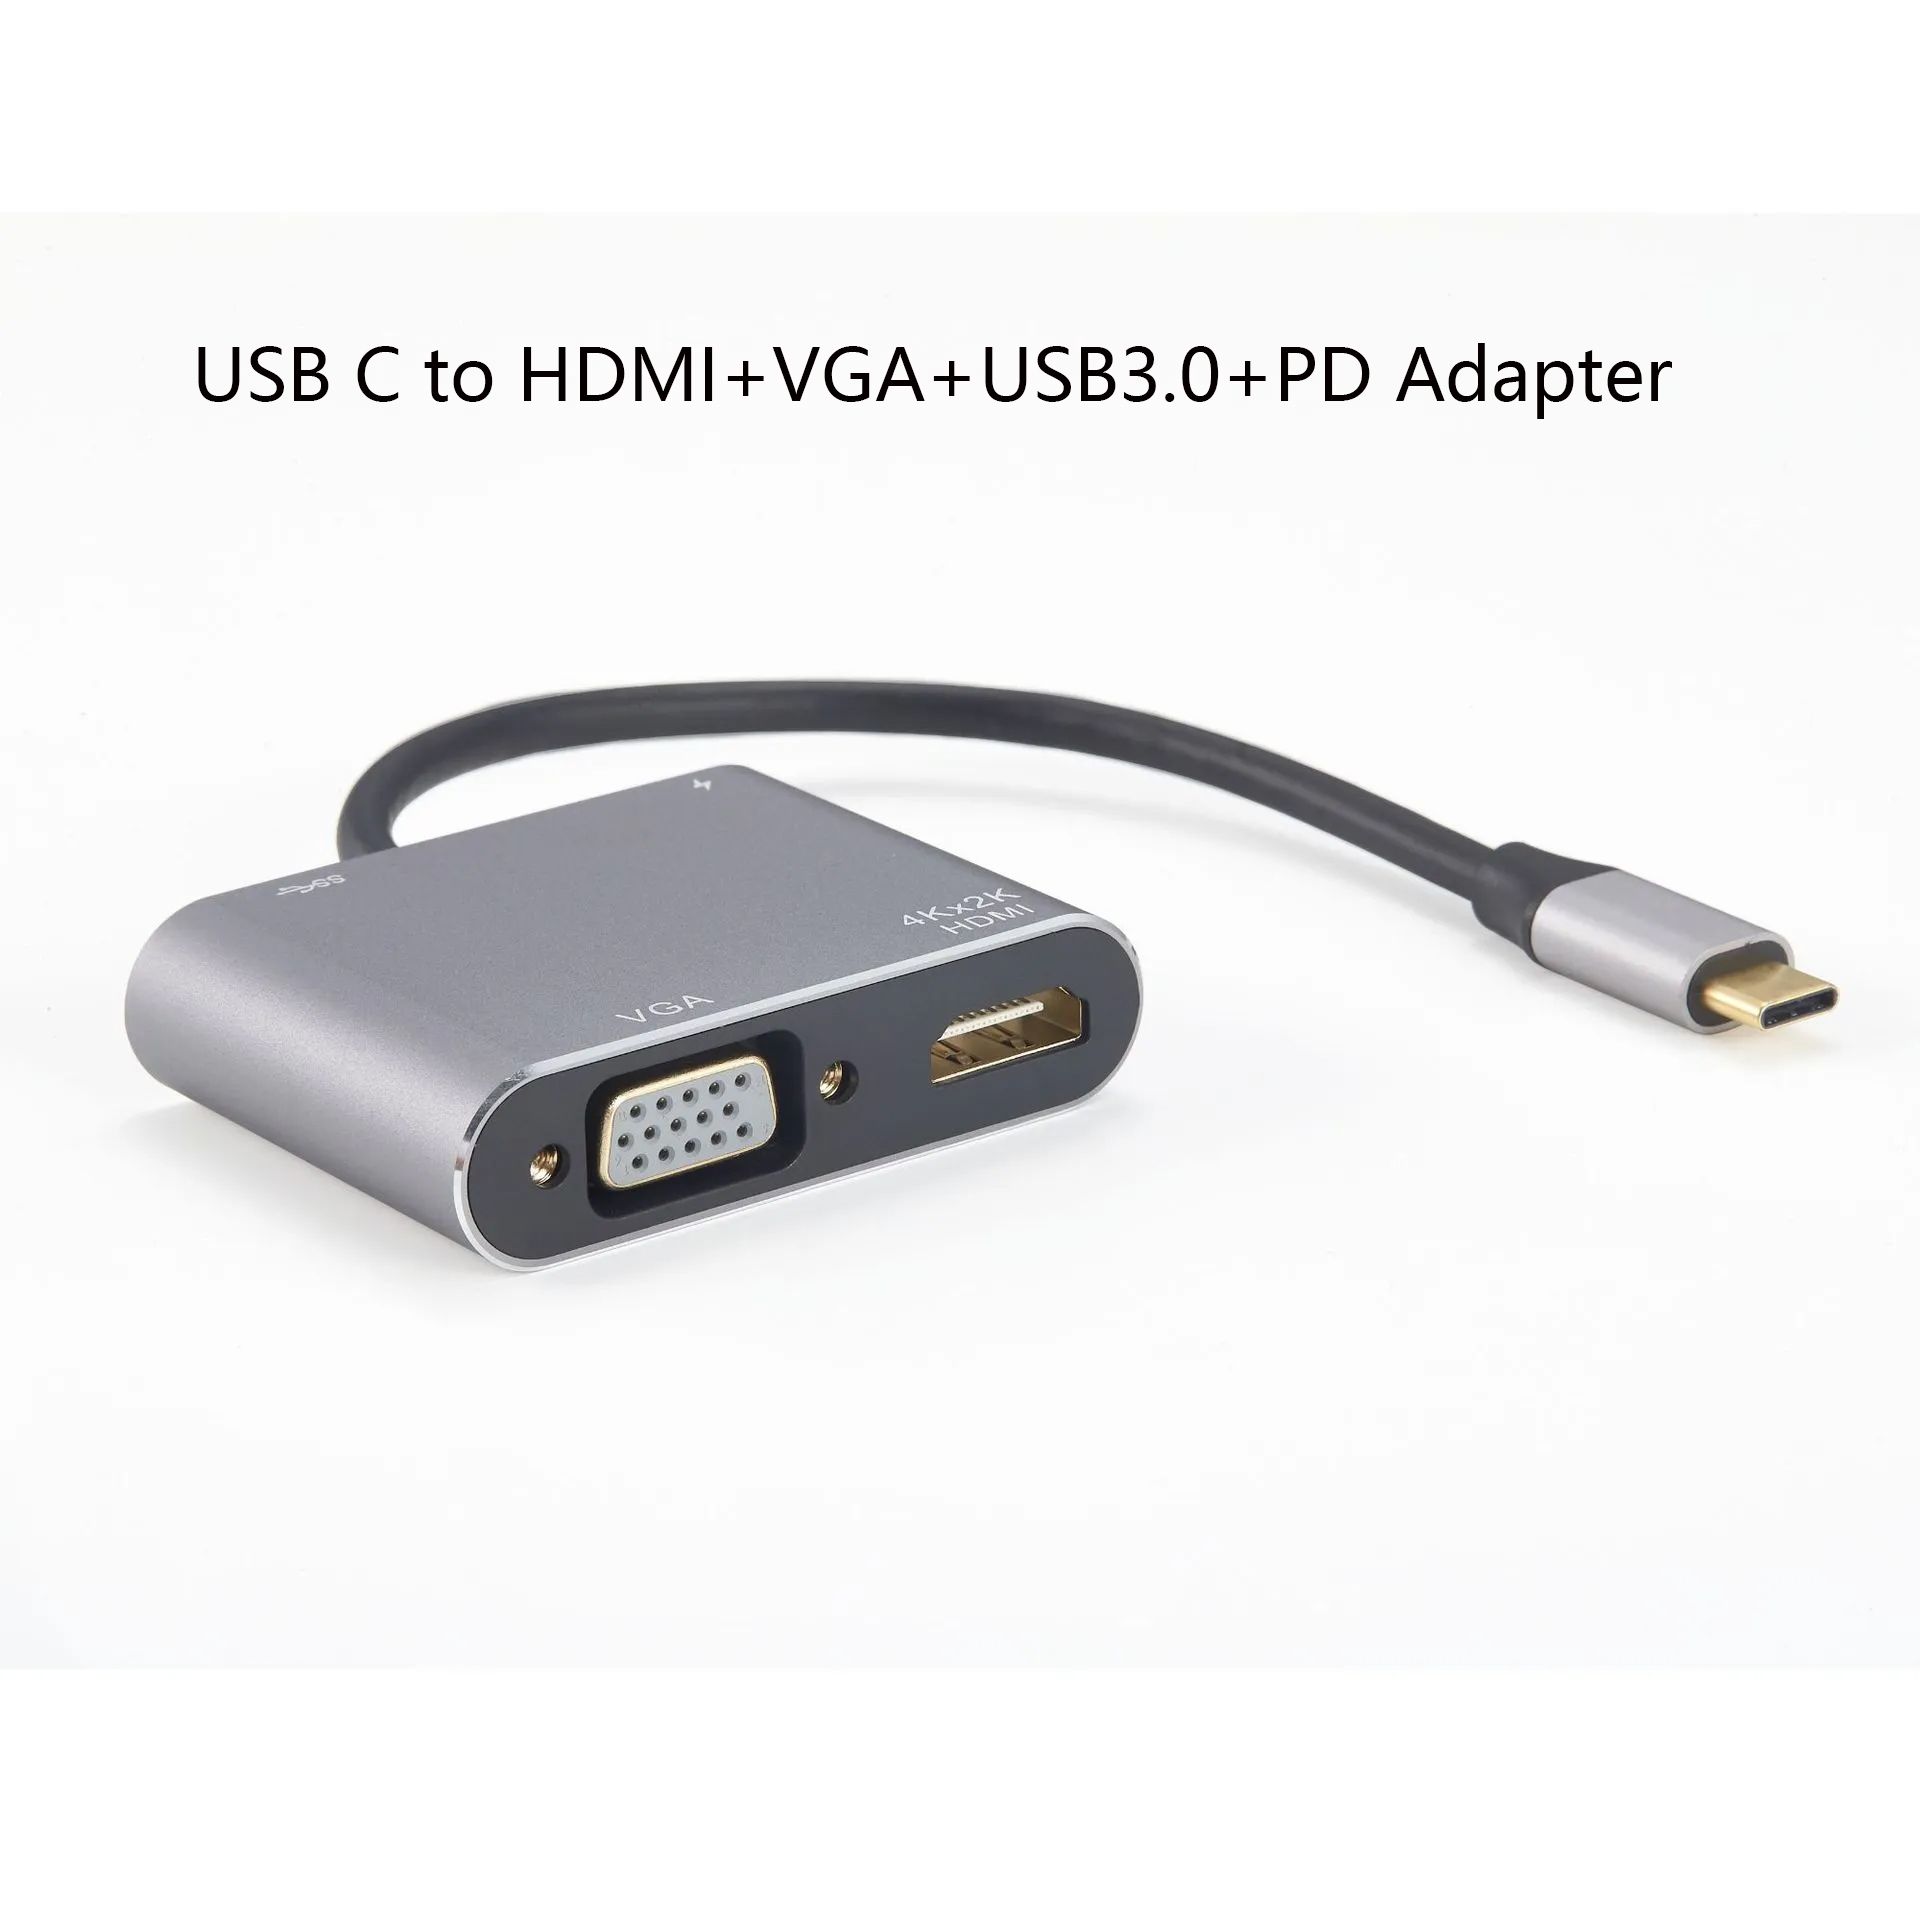 USB C to HDMI+VGA+USB3.0+PD Adapter